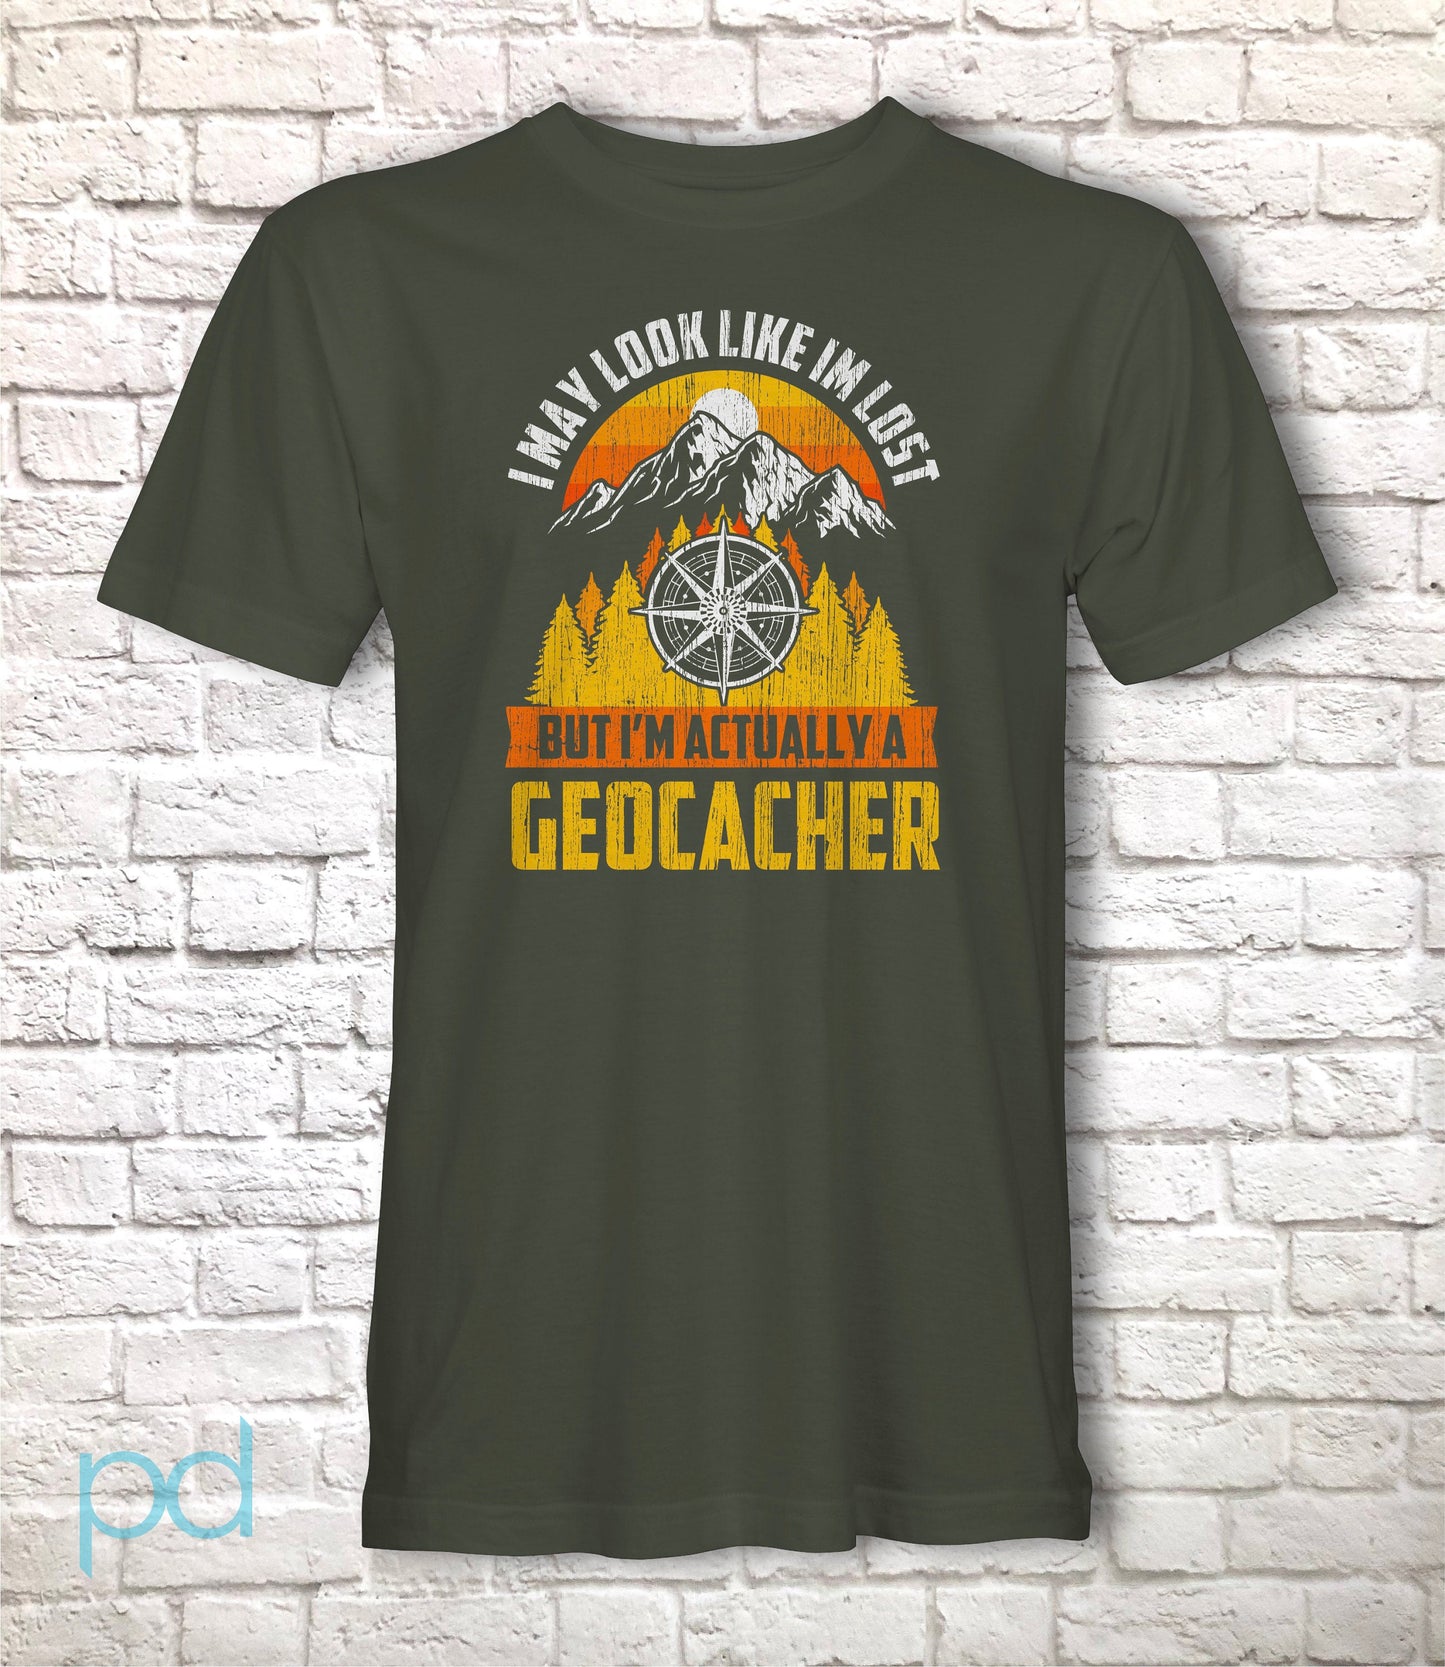 Funny Geocacher T-Shirt, Geocaching Gift Idea, Humorous GPS Satellites Treasure Hunter Graphic Print Tee Shirt Top